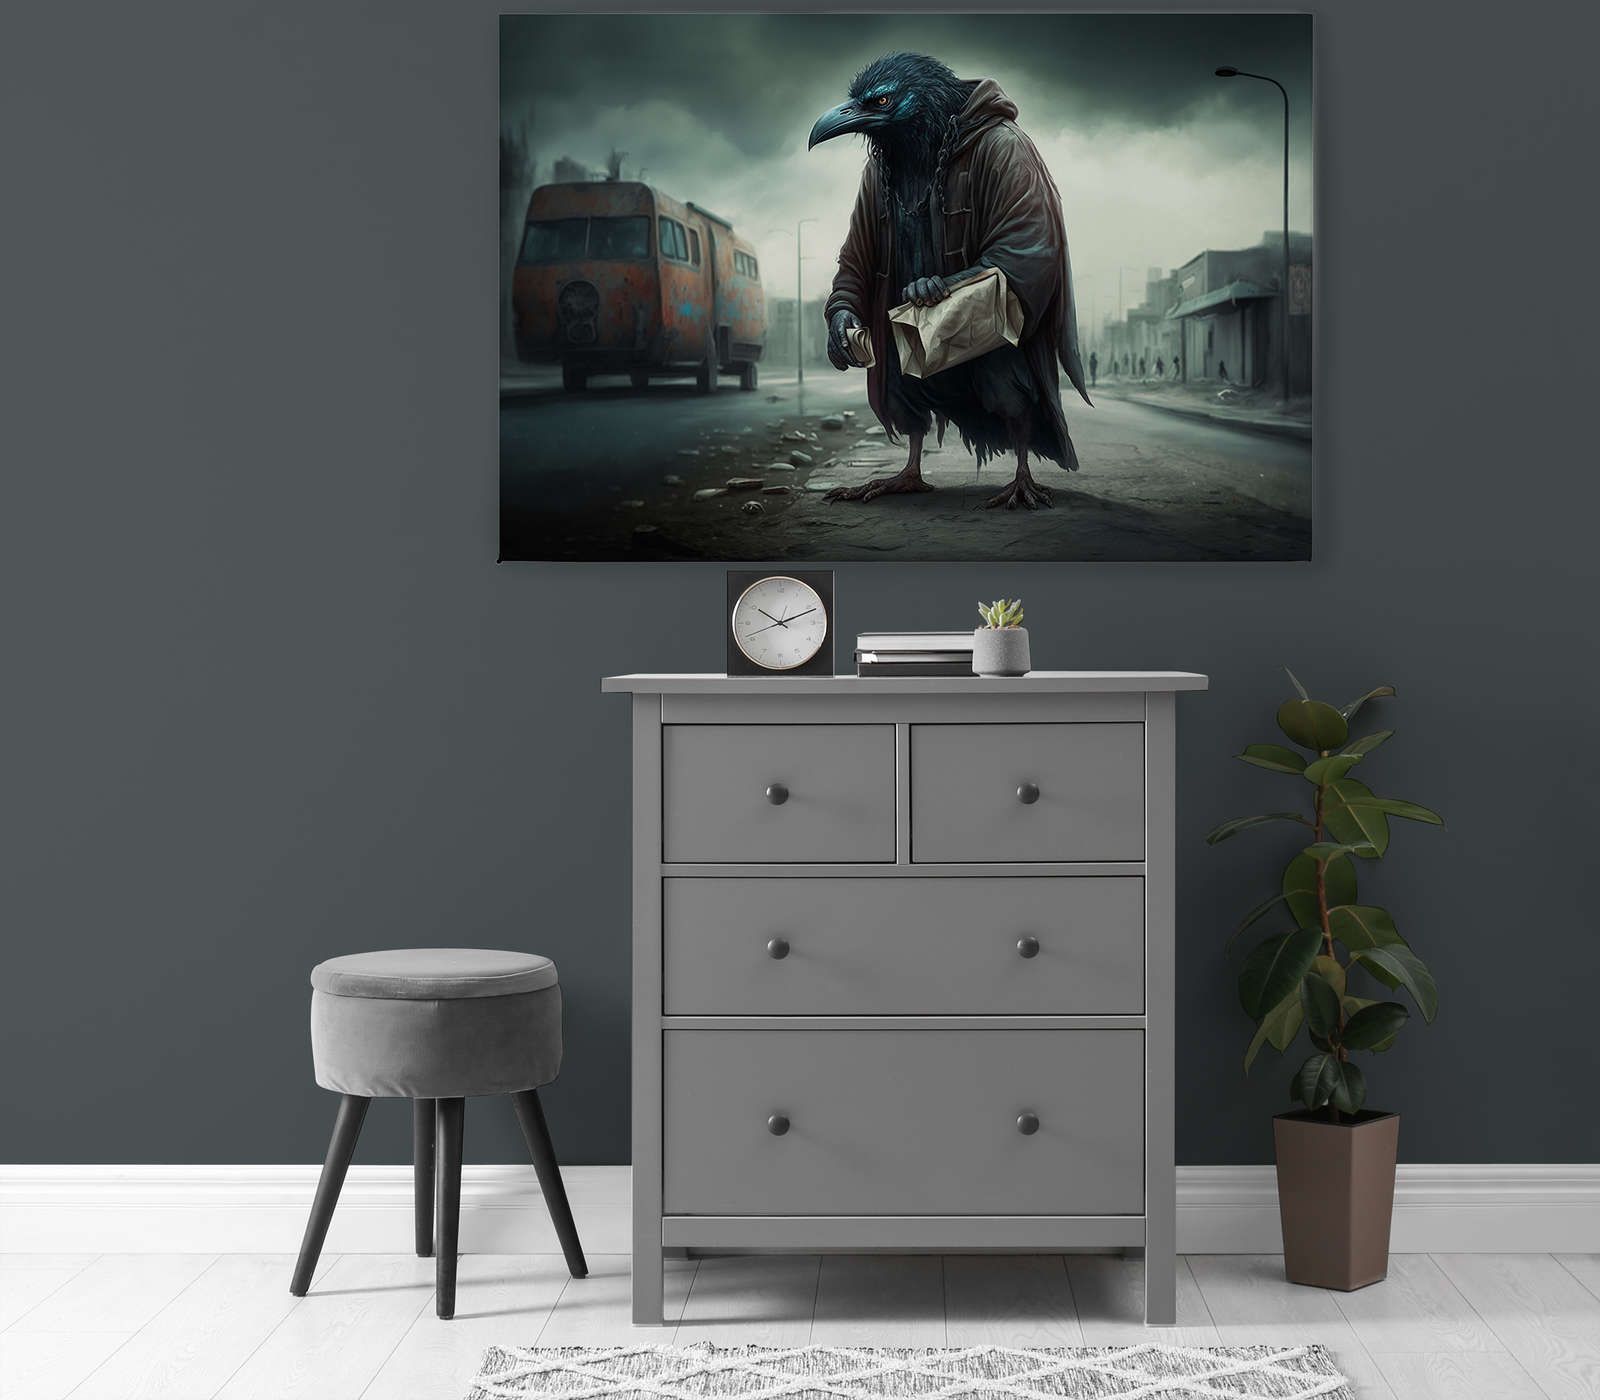             Toile KI »Street Crow« - 120 cm x 80 cm
        